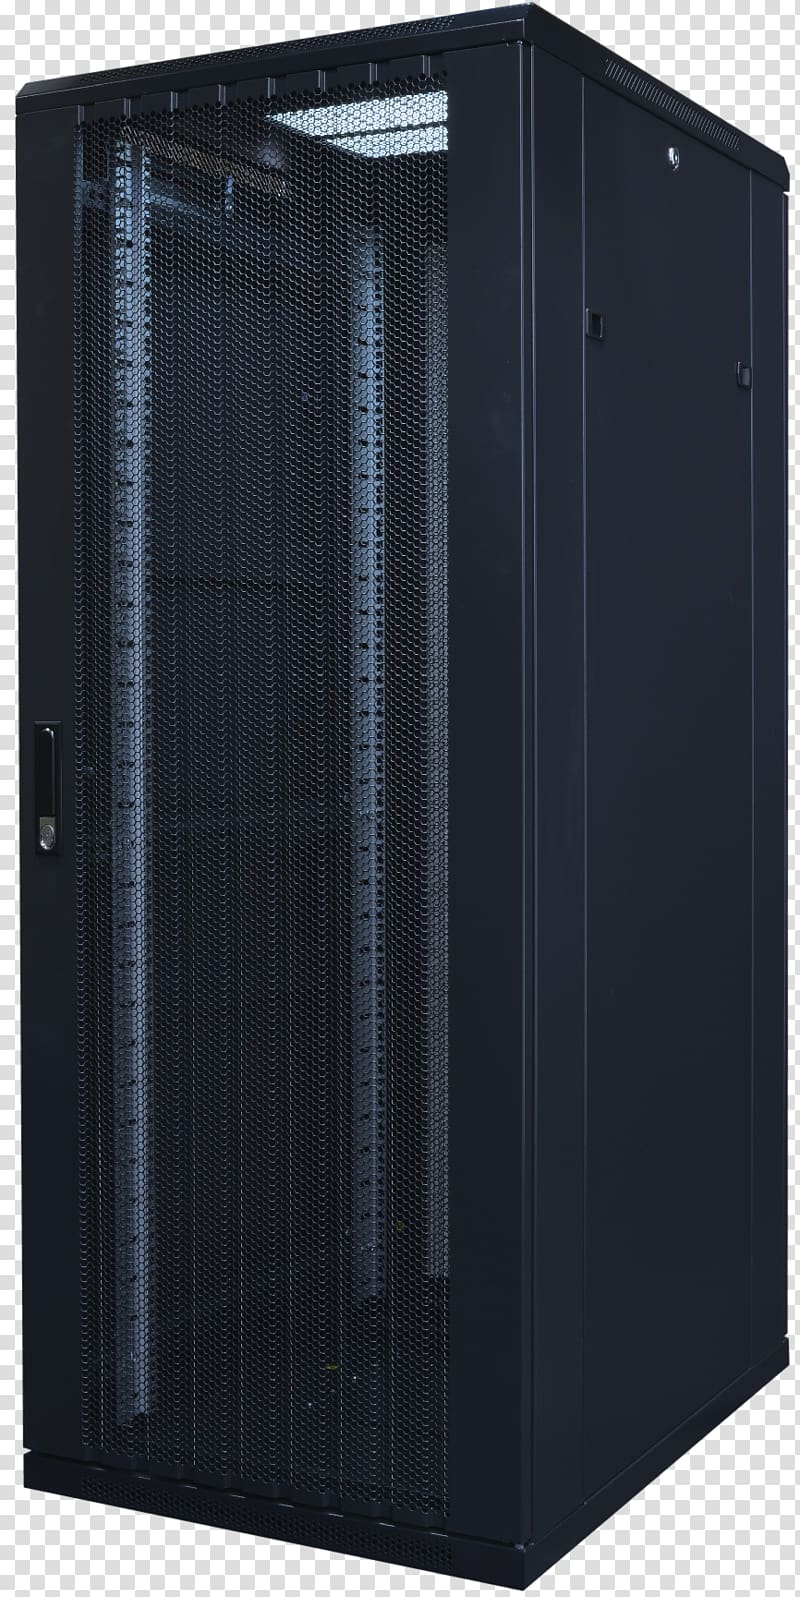 Computer Cases & Housings Computer Servers Sound box, Computer transparent background PNG clipart